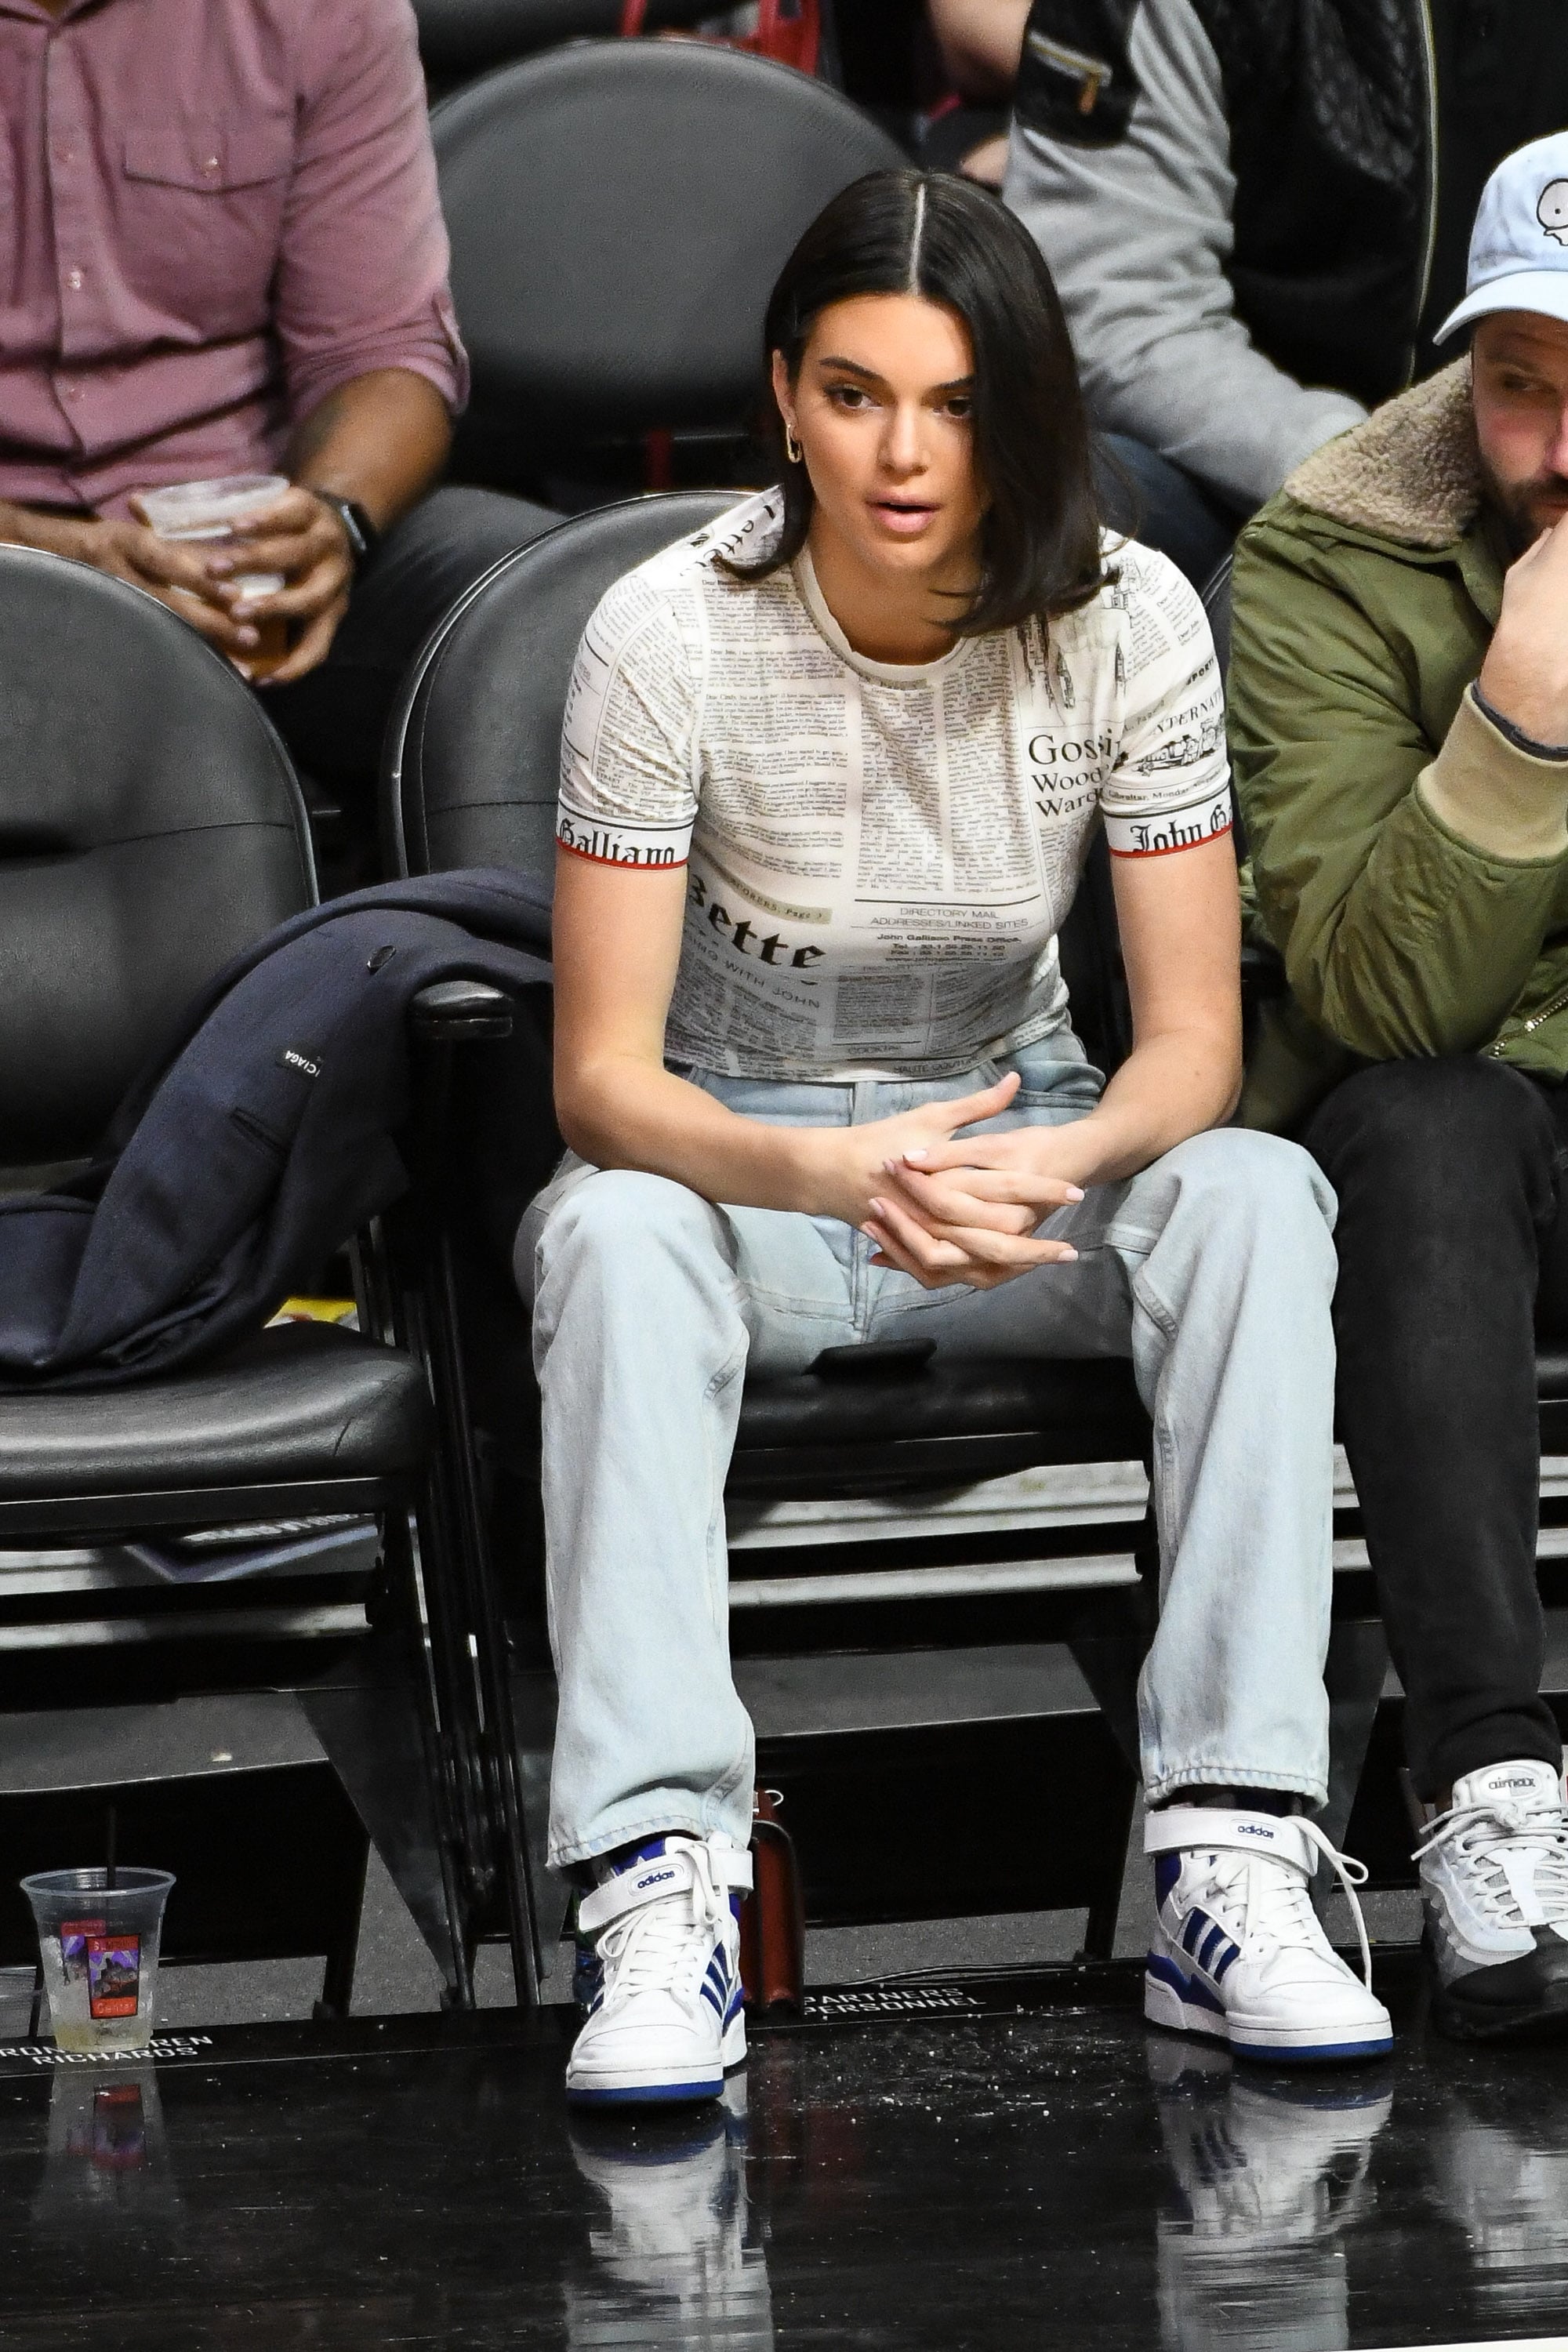 ilegal Cenagal respirar Kendall Jenner's Adidas Sneakers at Basketball Game | POPSUGAR Fashion